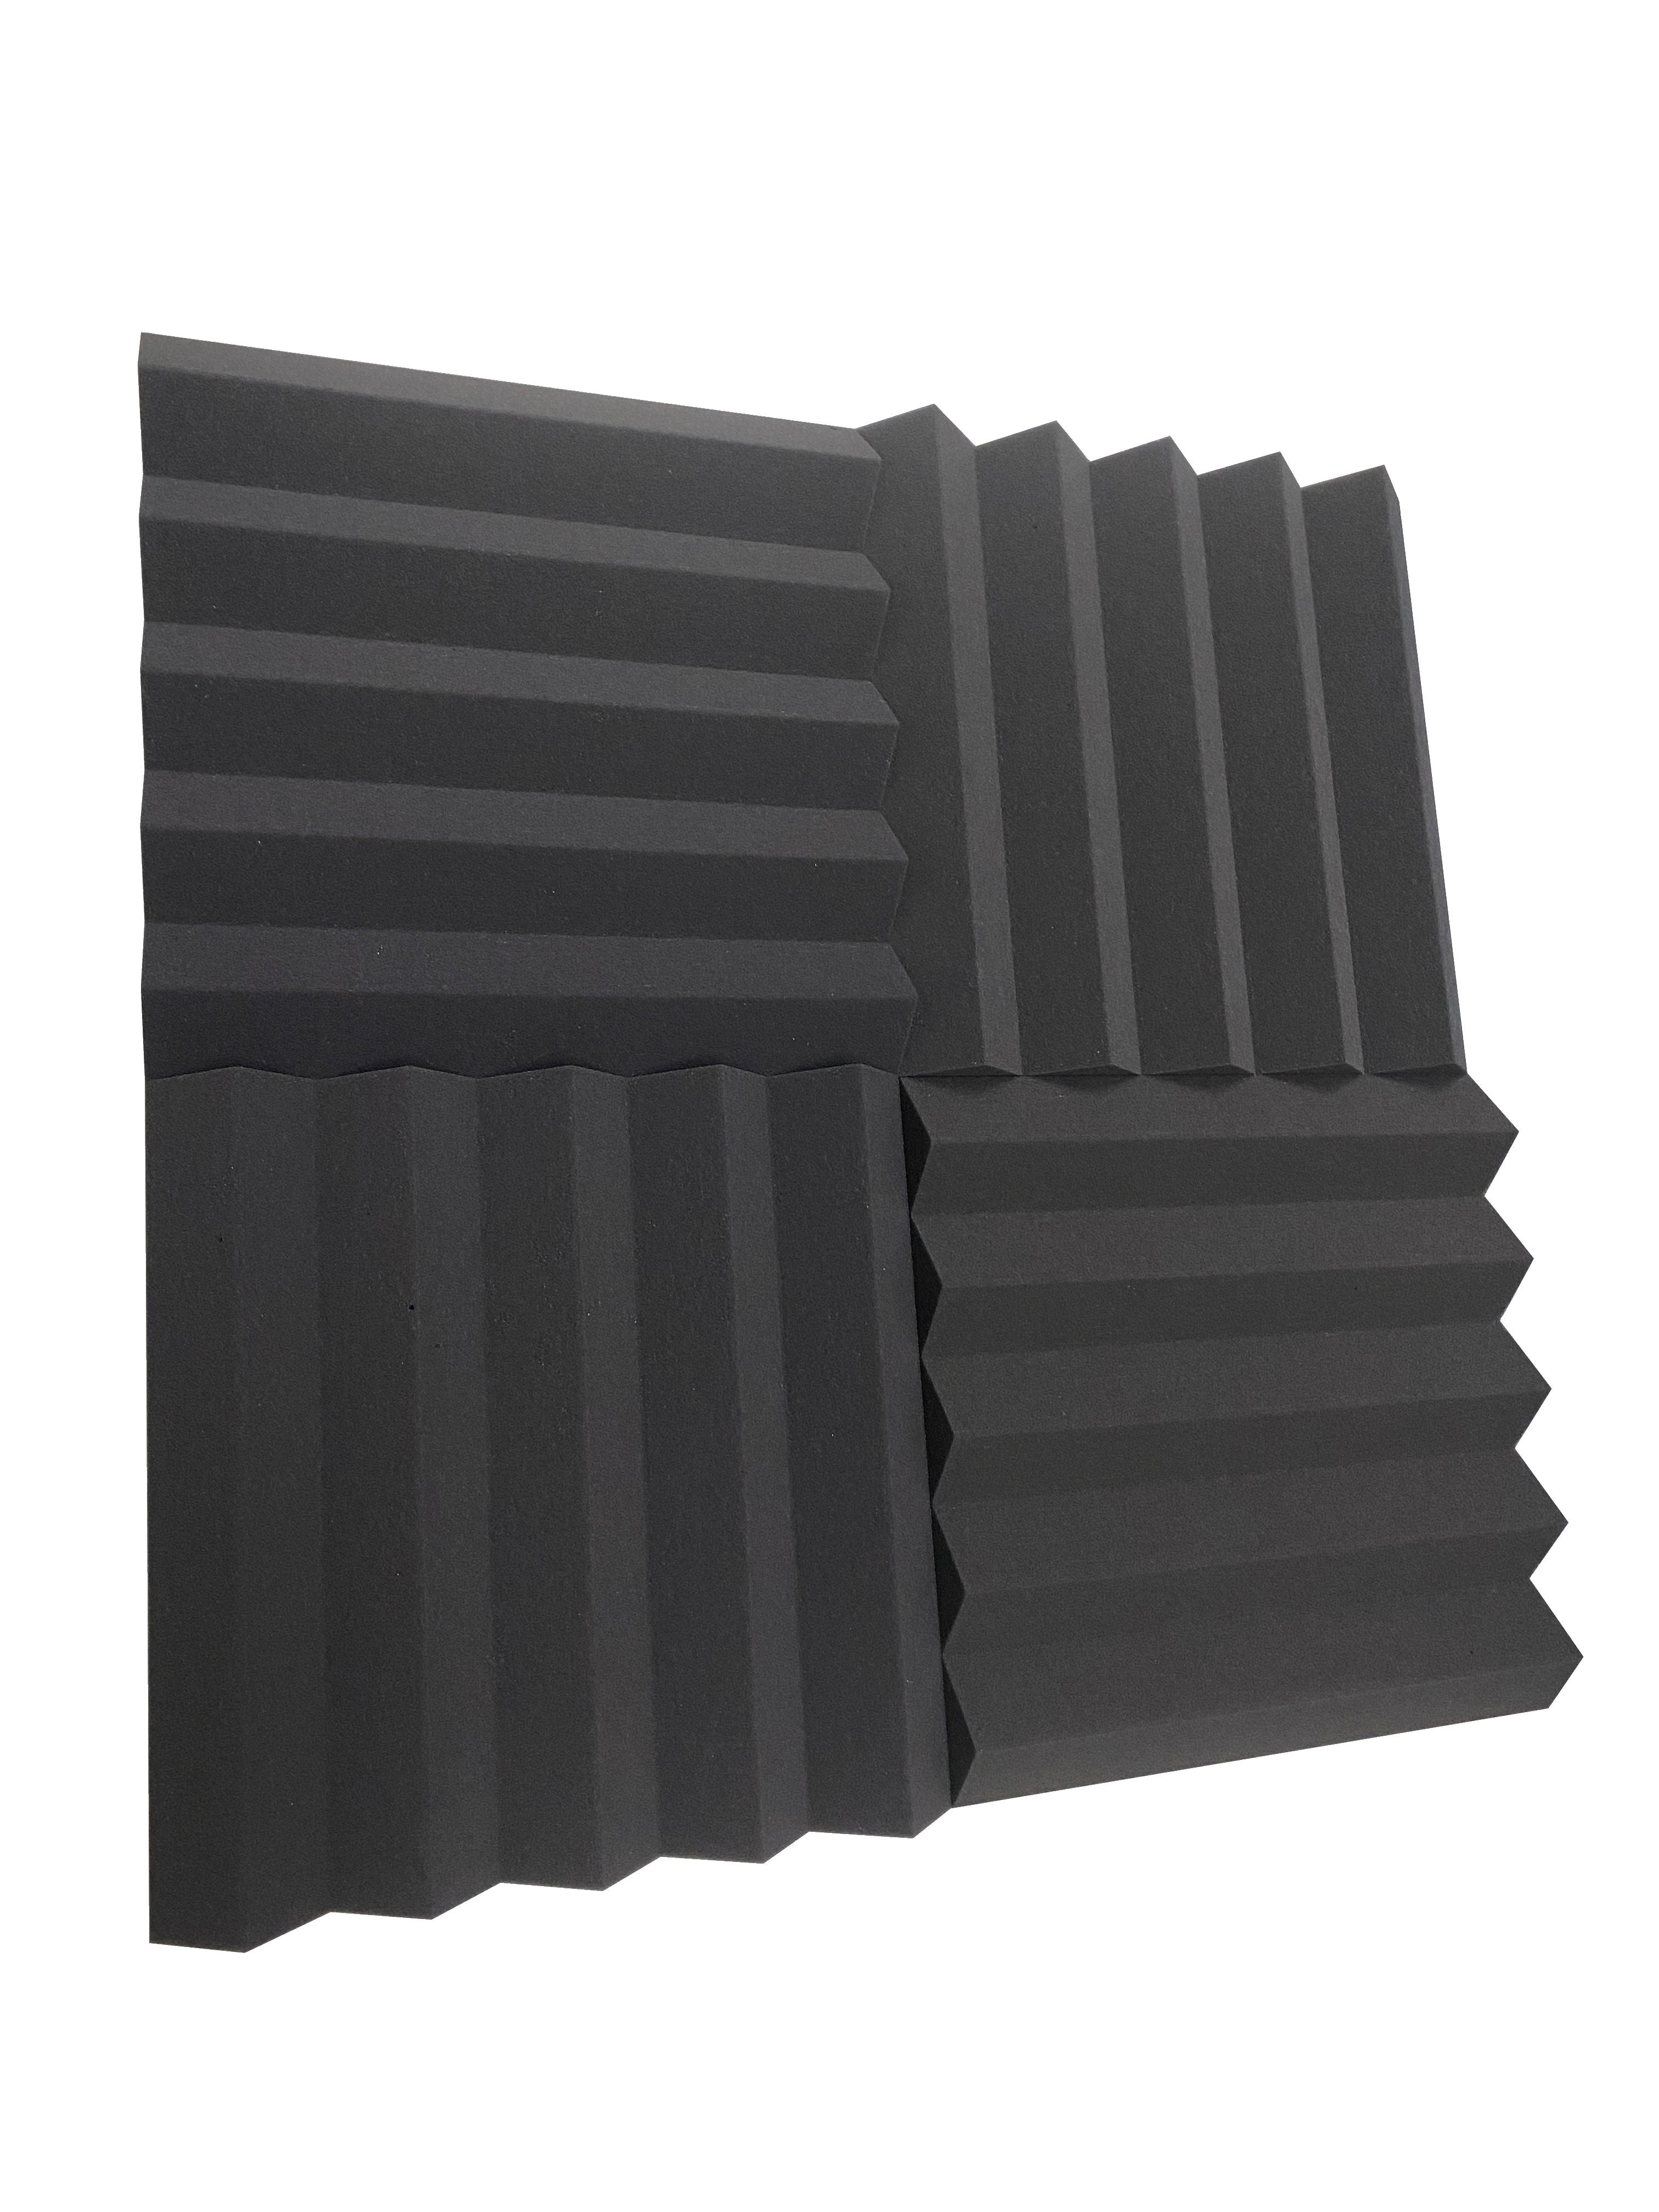 Buy dark-grey Wedge PRO 15&quot; Acoustic Studio Foam Tile Pack